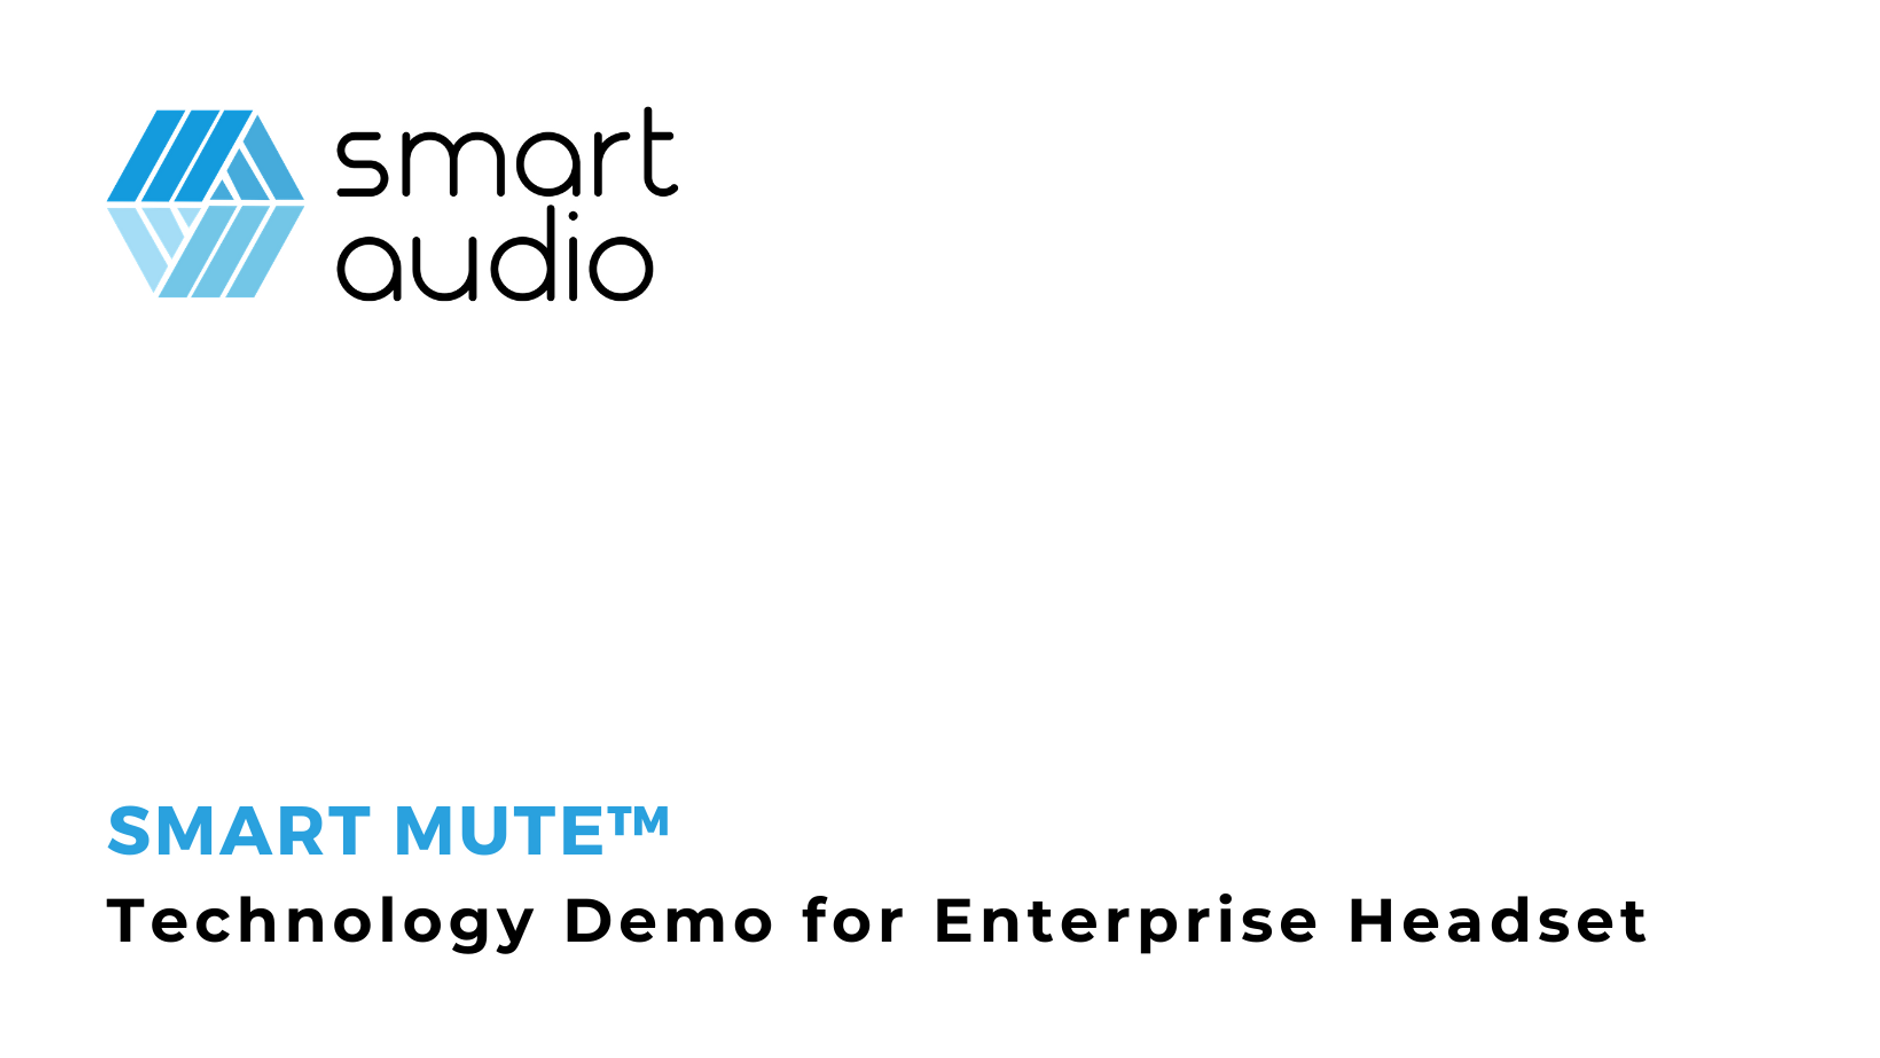 Smart Audio Demos